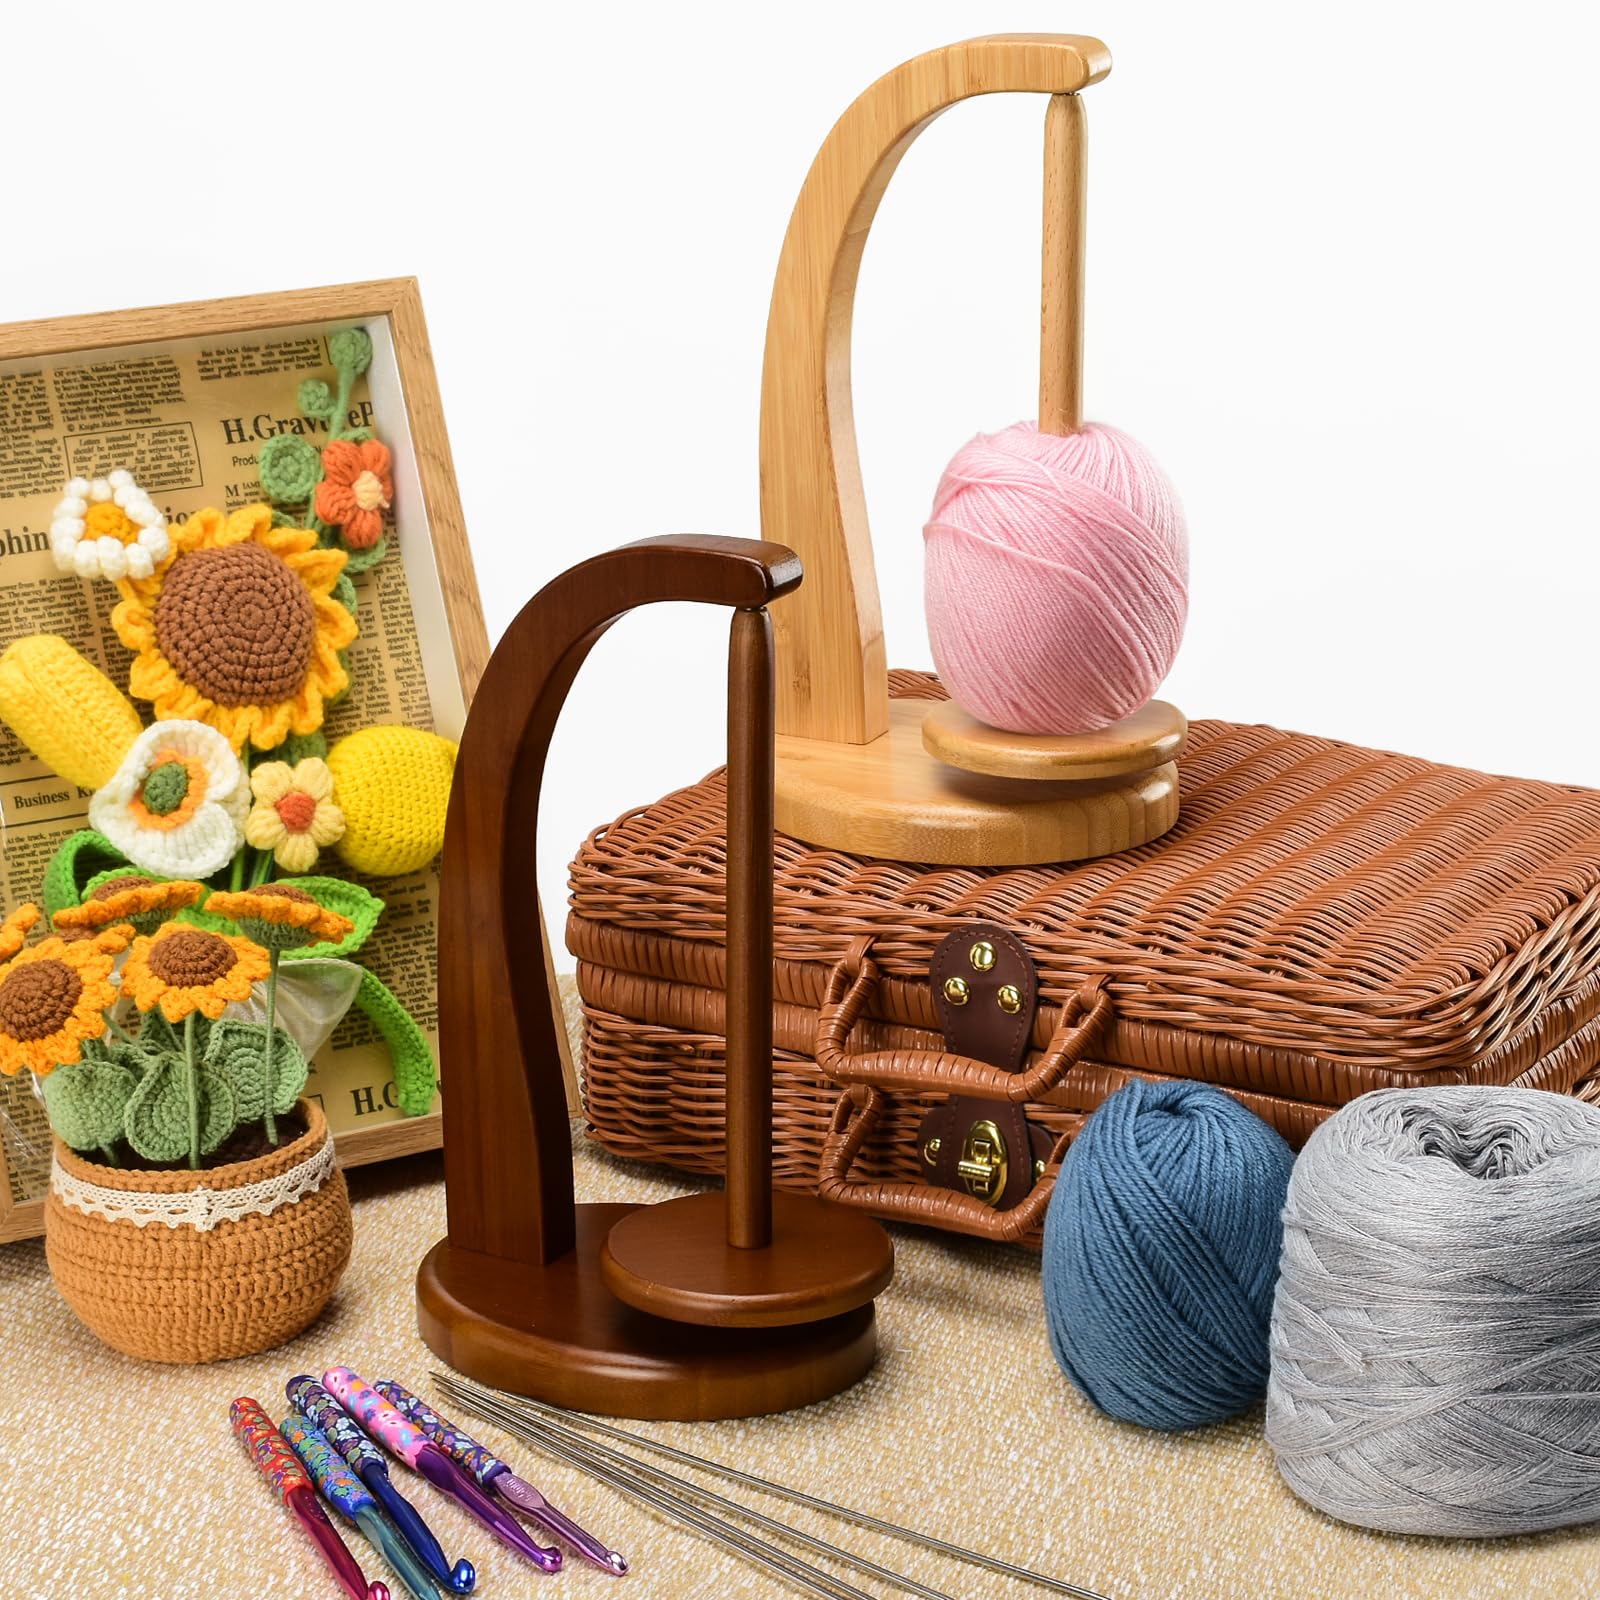 Yarn Holder for Knitting and Crocheting,Crochet Gift for Knitting Lovers,Wooden Yarn Spinner for Crochet by Artowell (Original Bamboo Color)